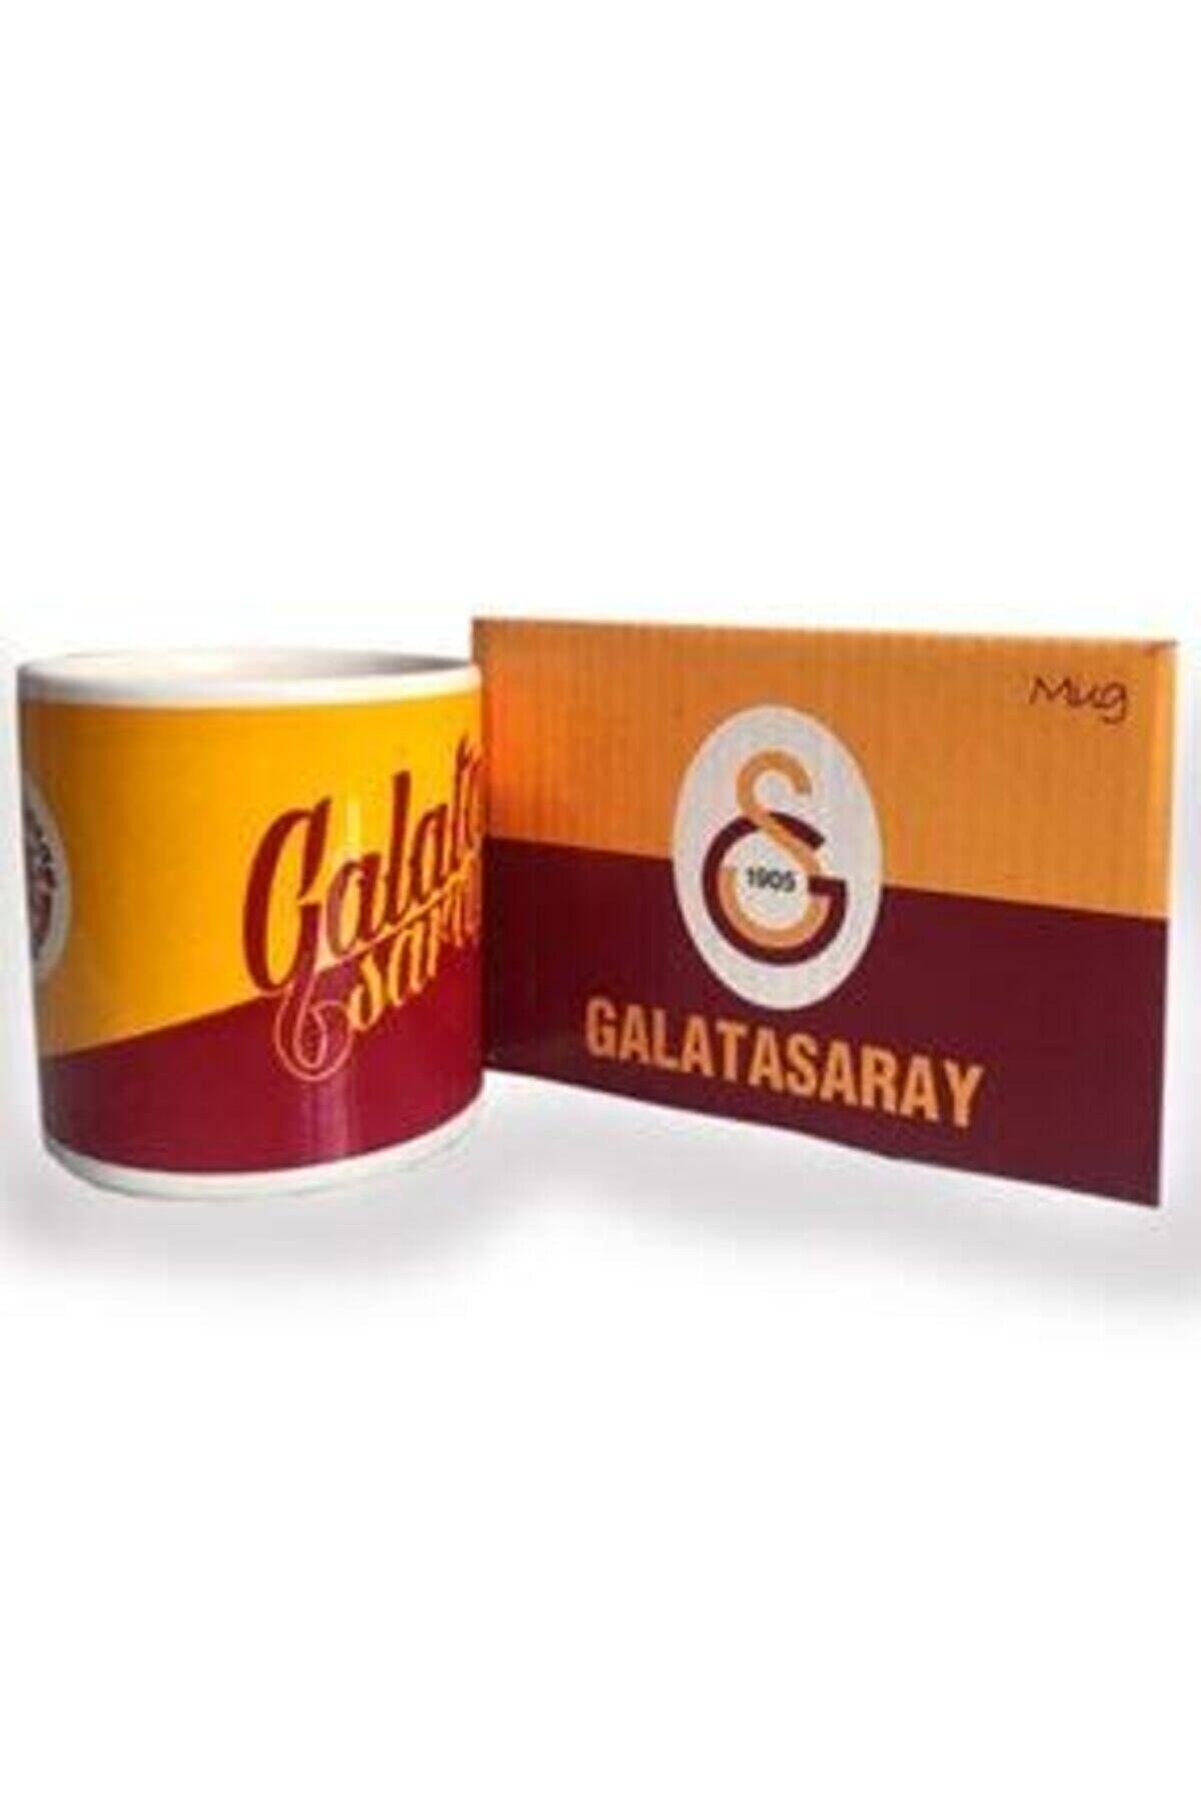 Galatasaray Galatasaray Taraftar Lisanslı Kupa Bardak